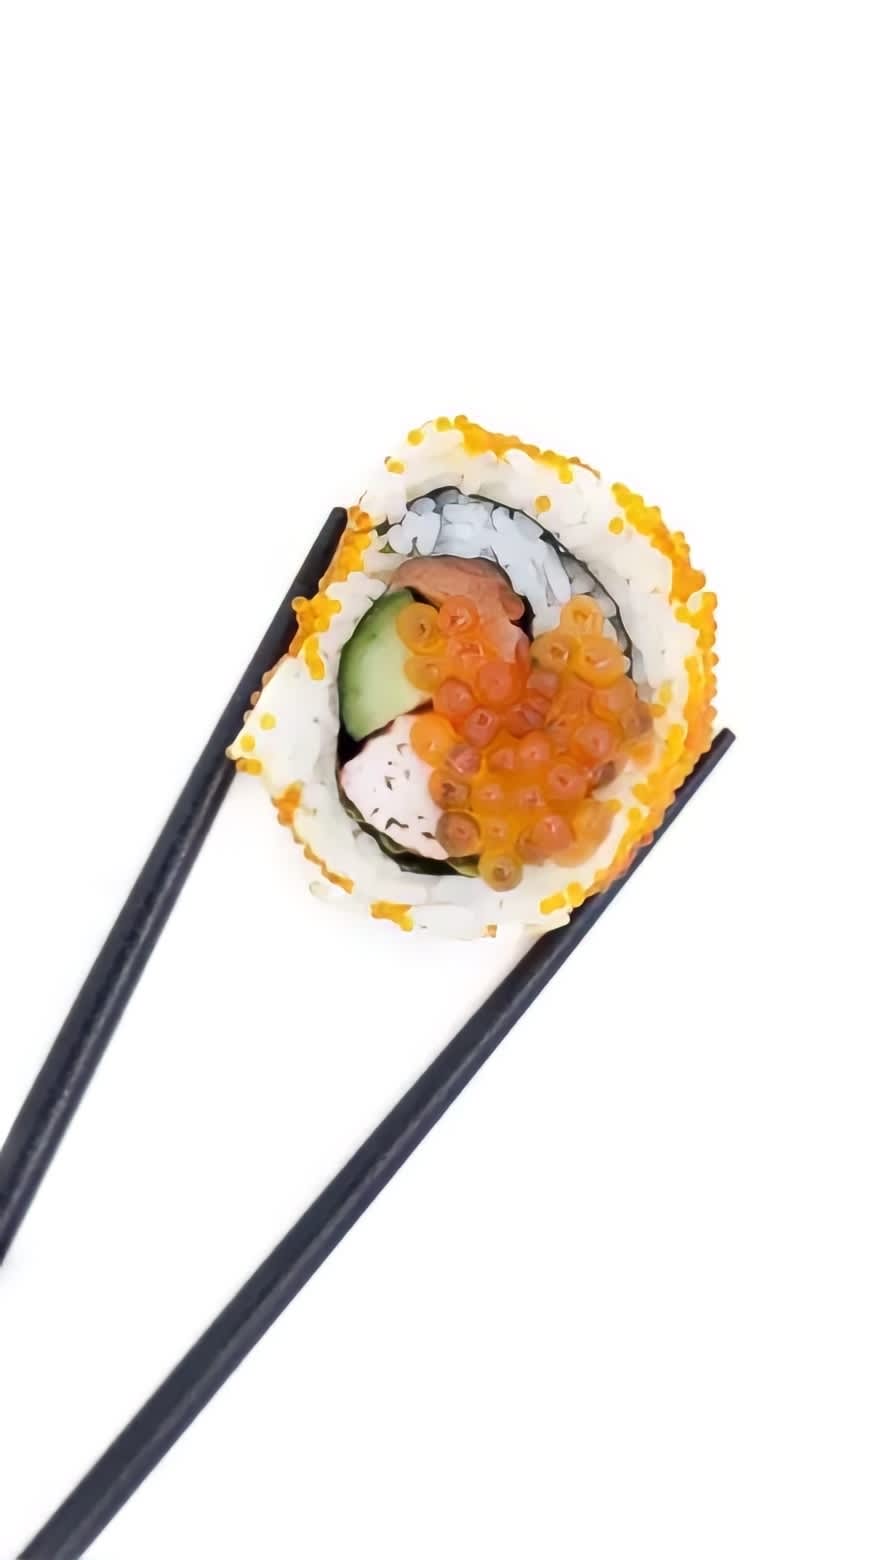 Tobiko on a sushi roll held in chopsticks